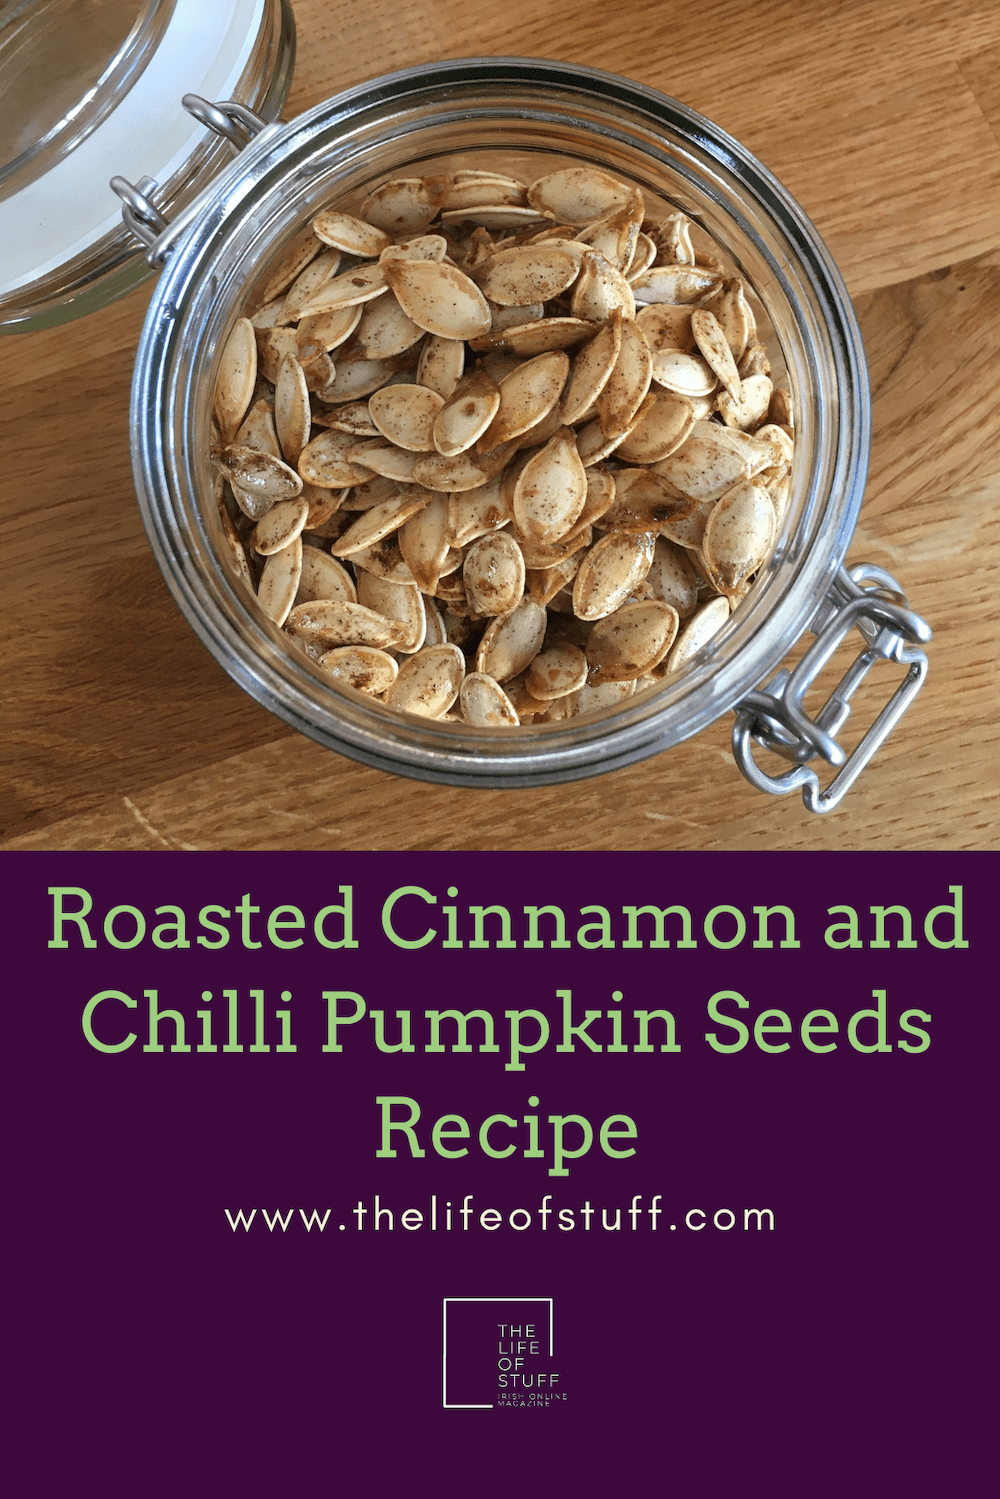 Roasted Cinnamon and Chilli Pumpkin Seeds Recipe - The Life of Stuff - Irish Online Magazine